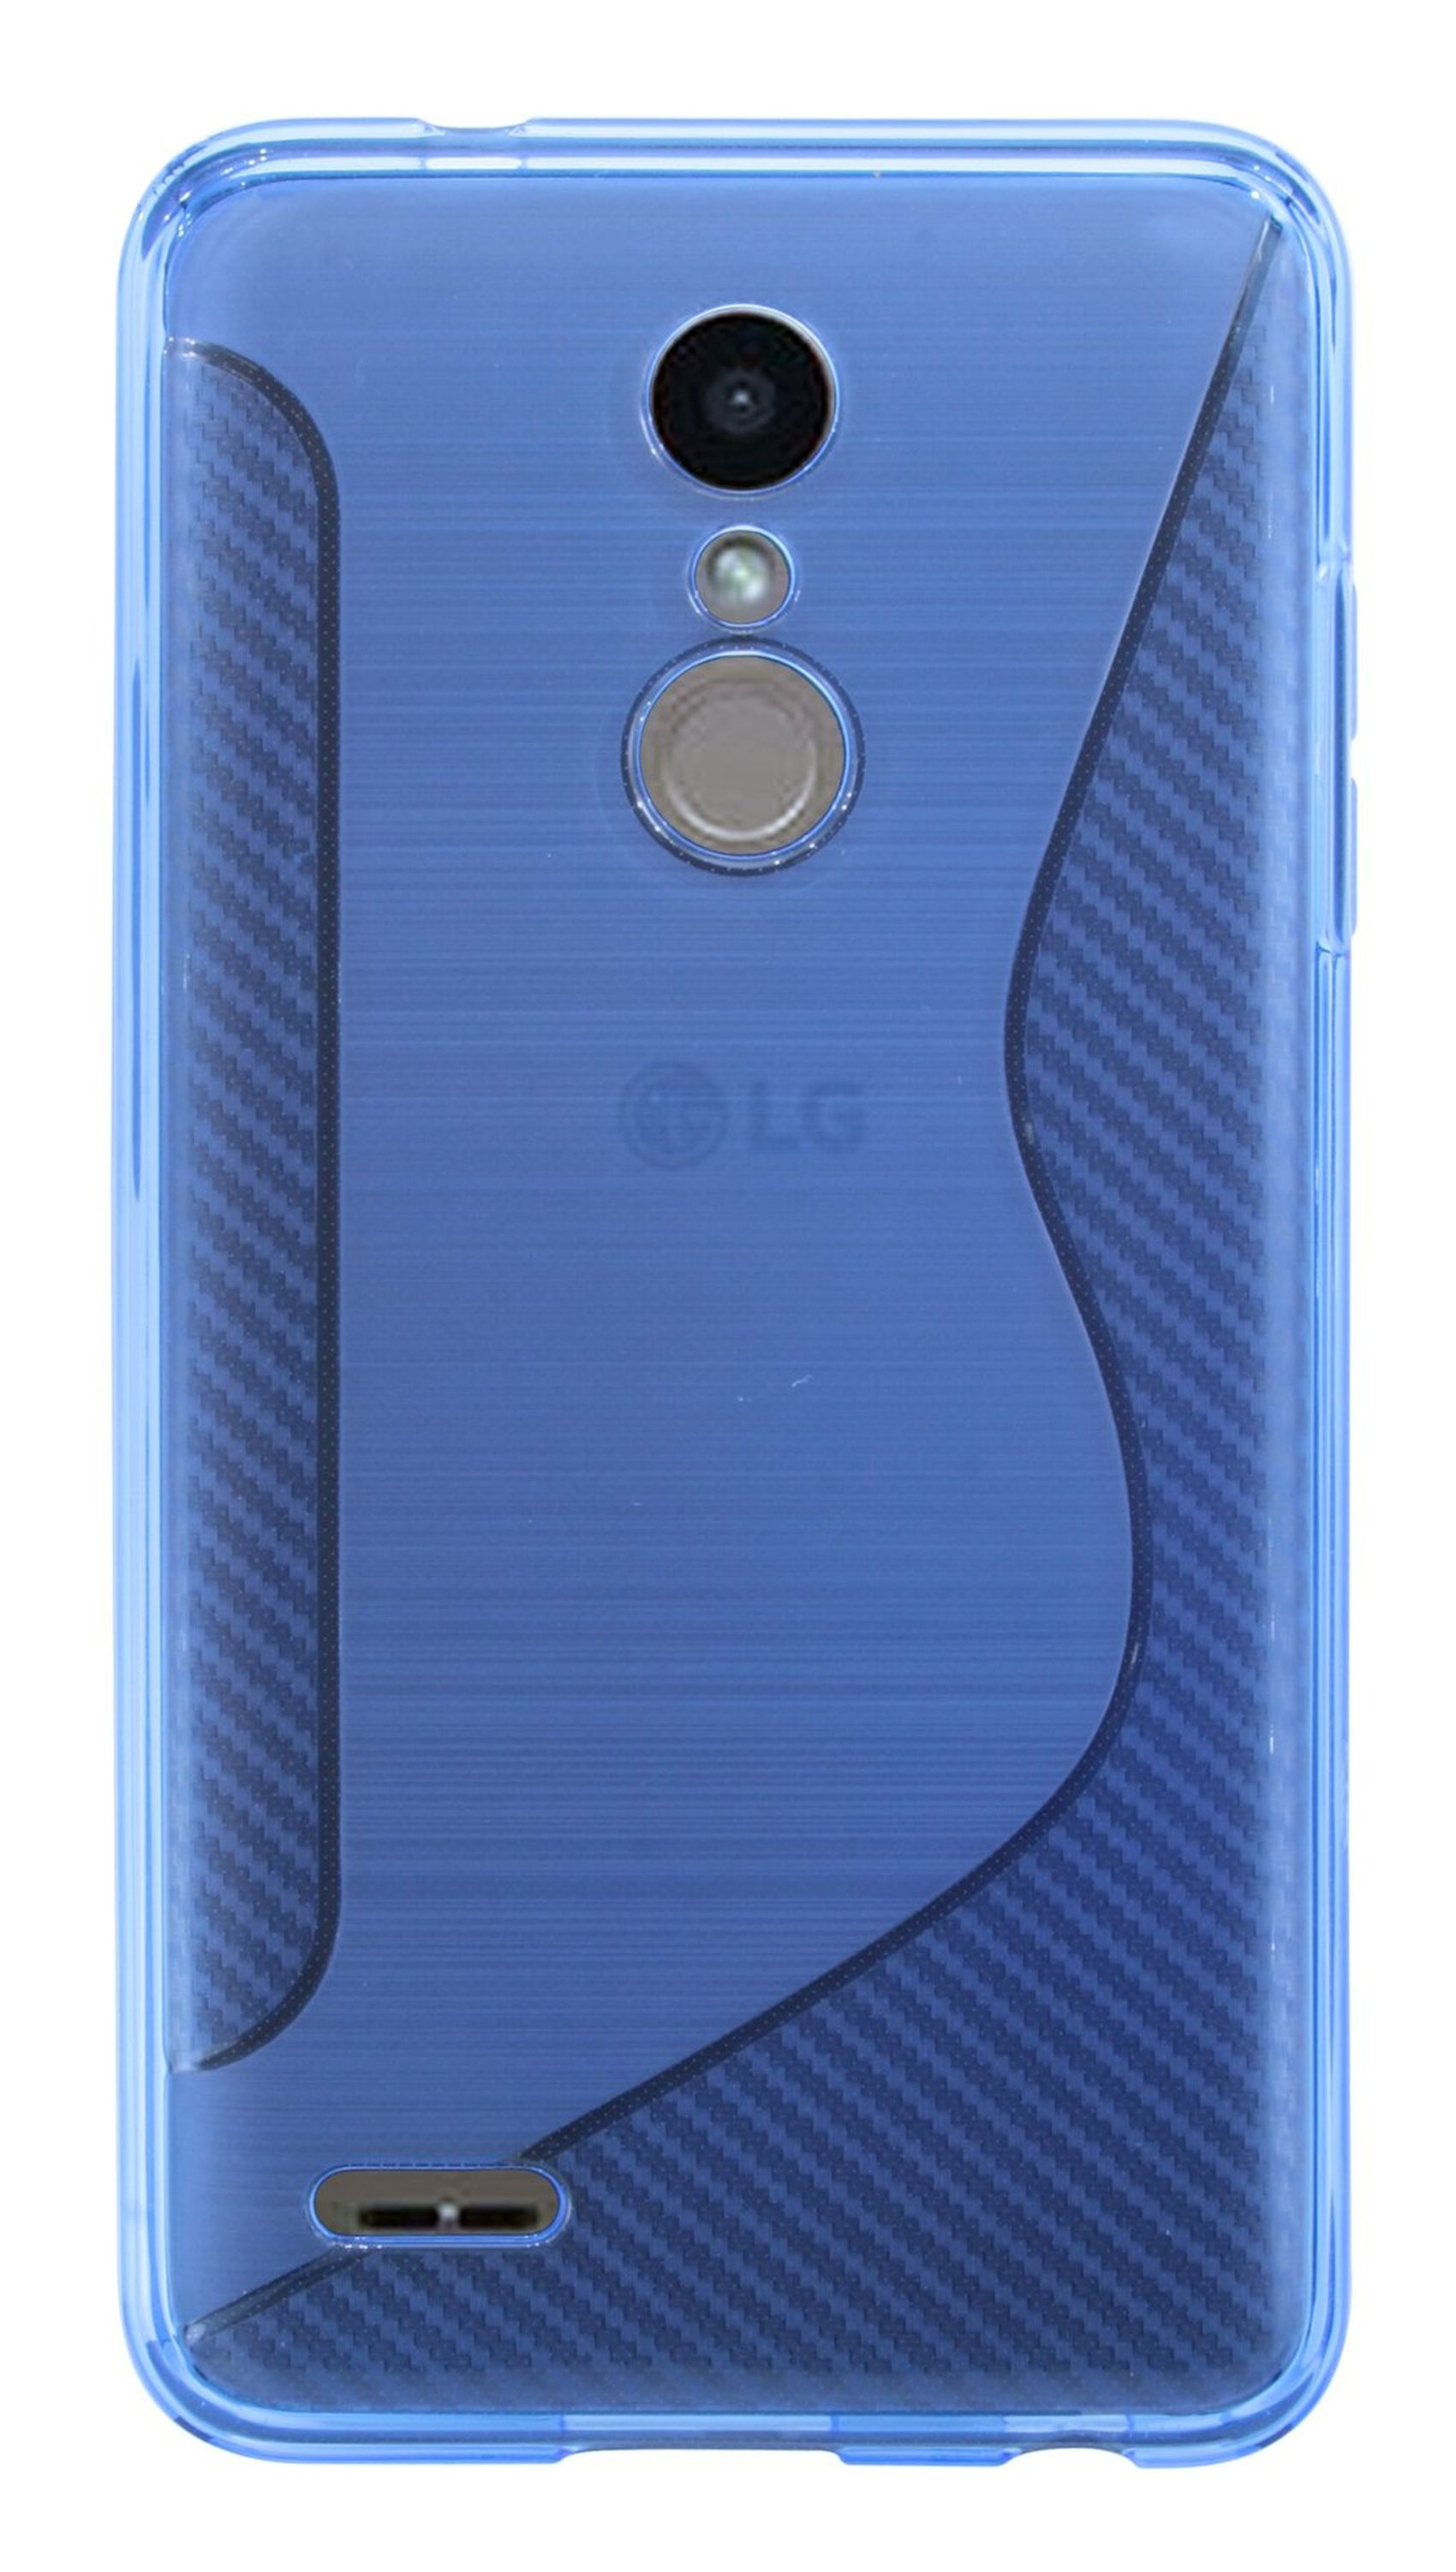 COFI LG Case Cover Blau, in K9, Silikonschale Hülle Bumper Zubehör K9//S-Line Bumper, SchutzHülle LG, Silikon TPU Blau